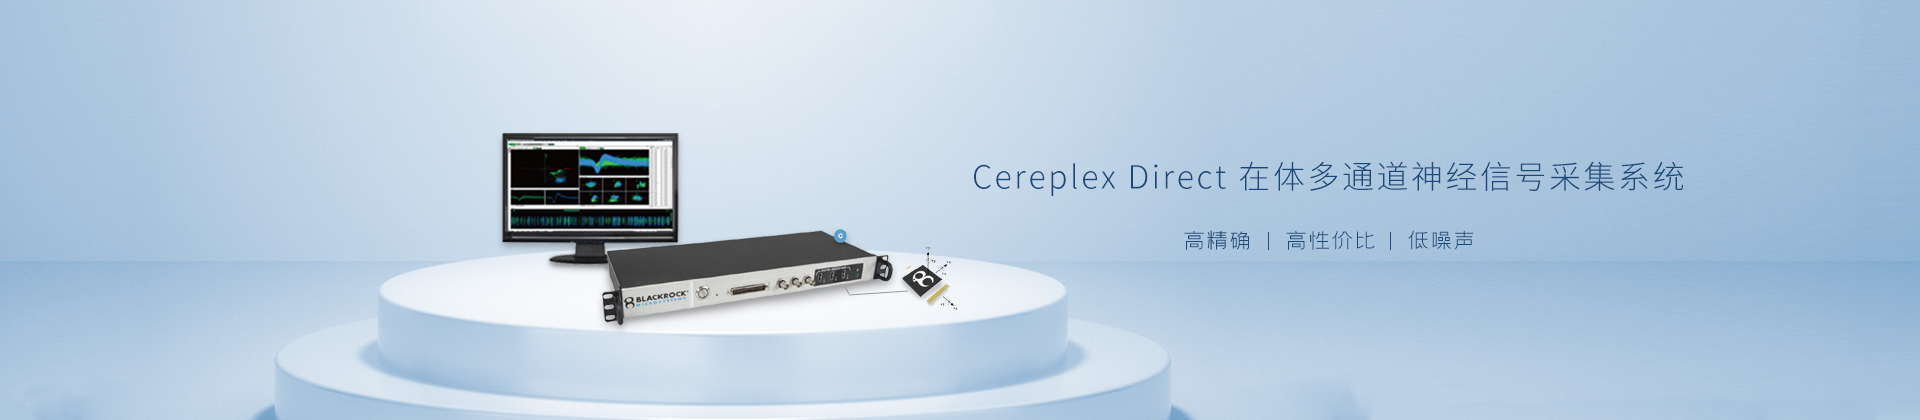 Cereplex Direct 在体多通道神经信号采集系统